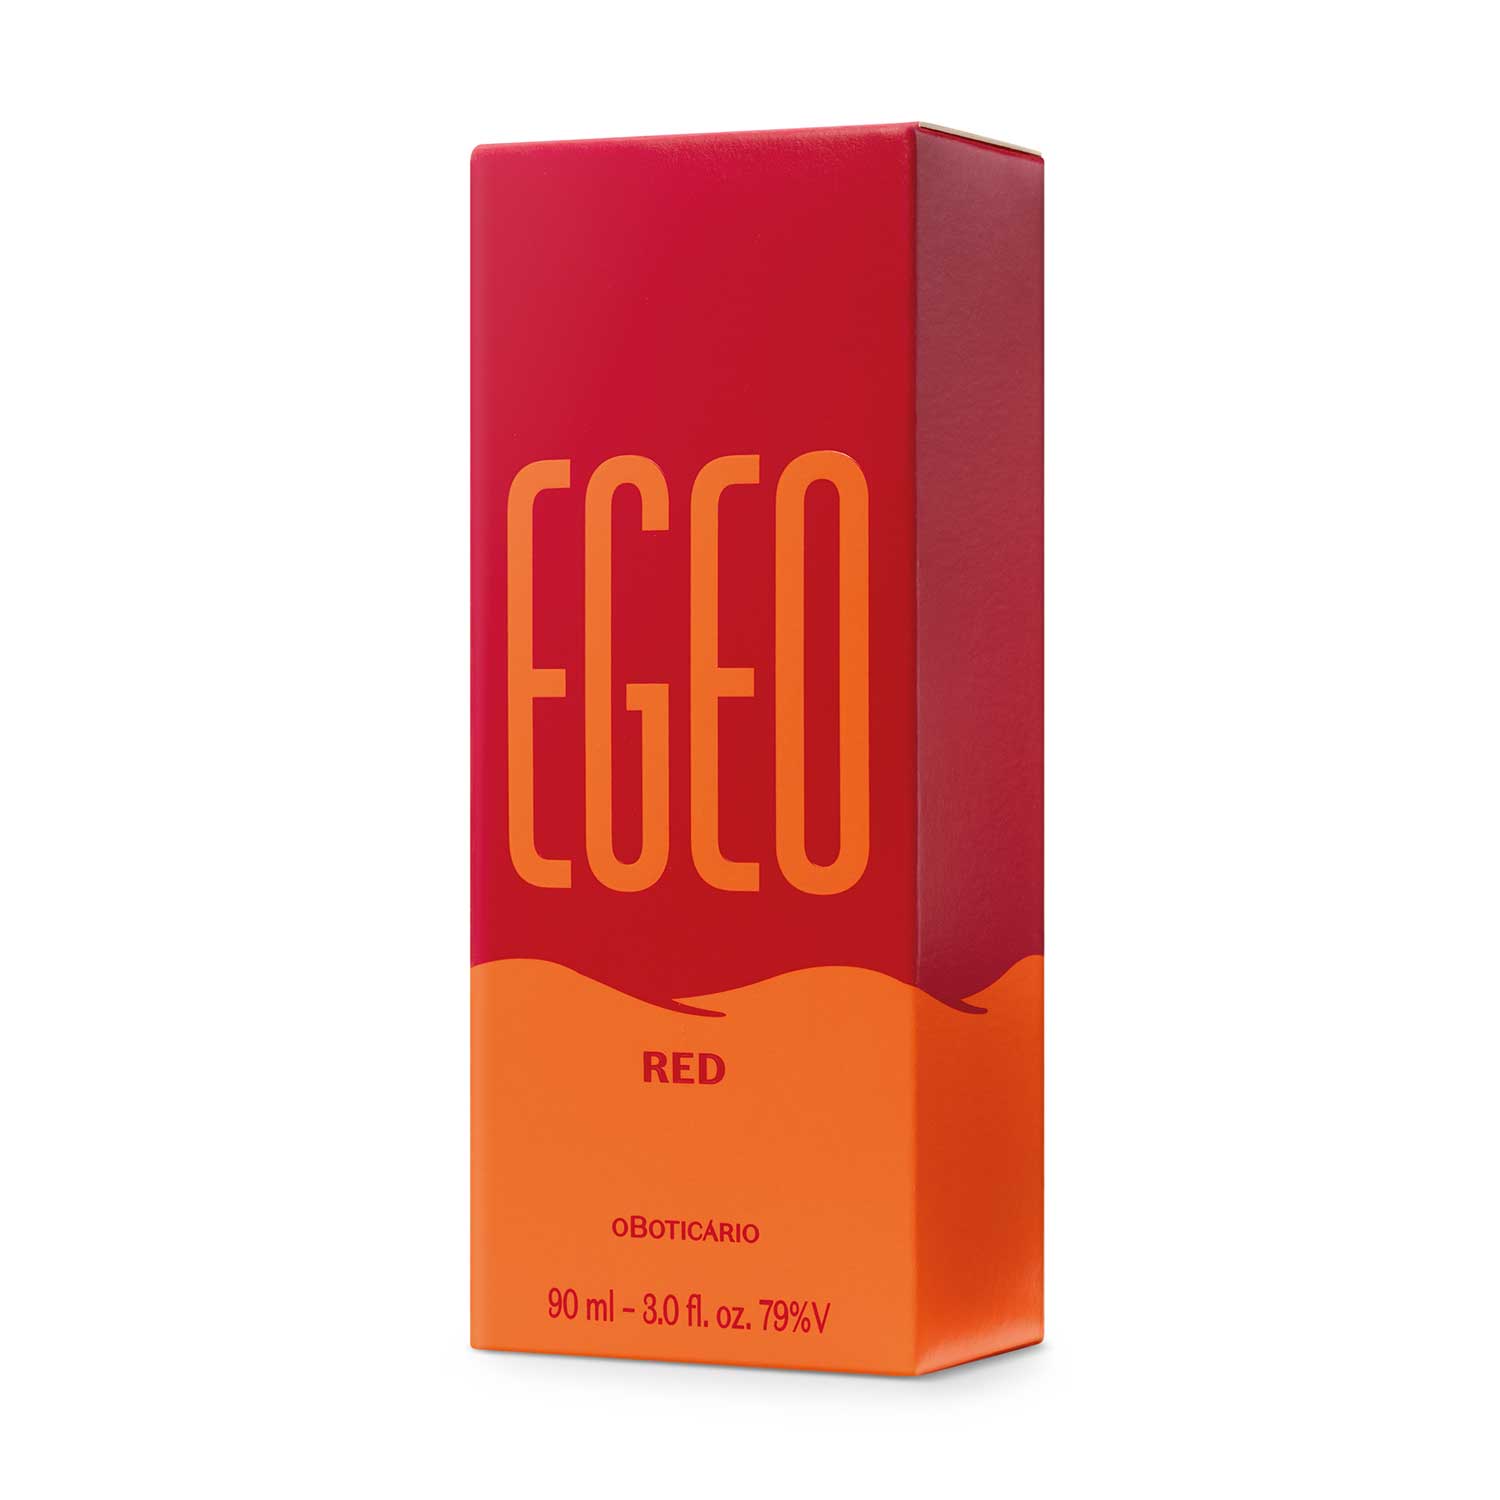 Perfume  Egeo Edt Red 90Ml en Oboticário Colombia